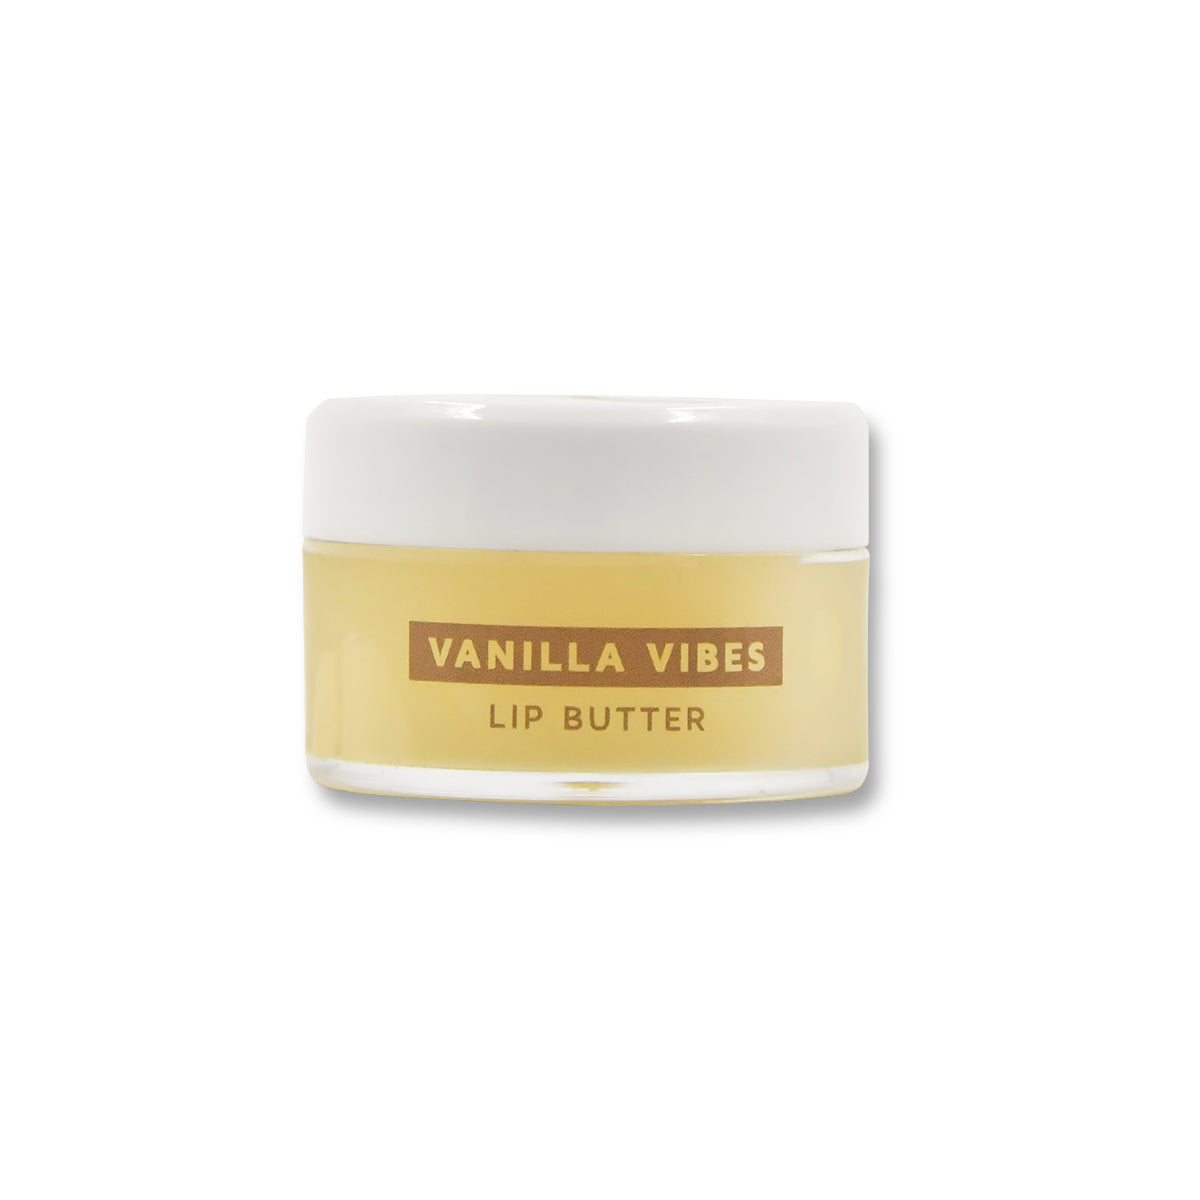 Vanilla Vibes lip butter